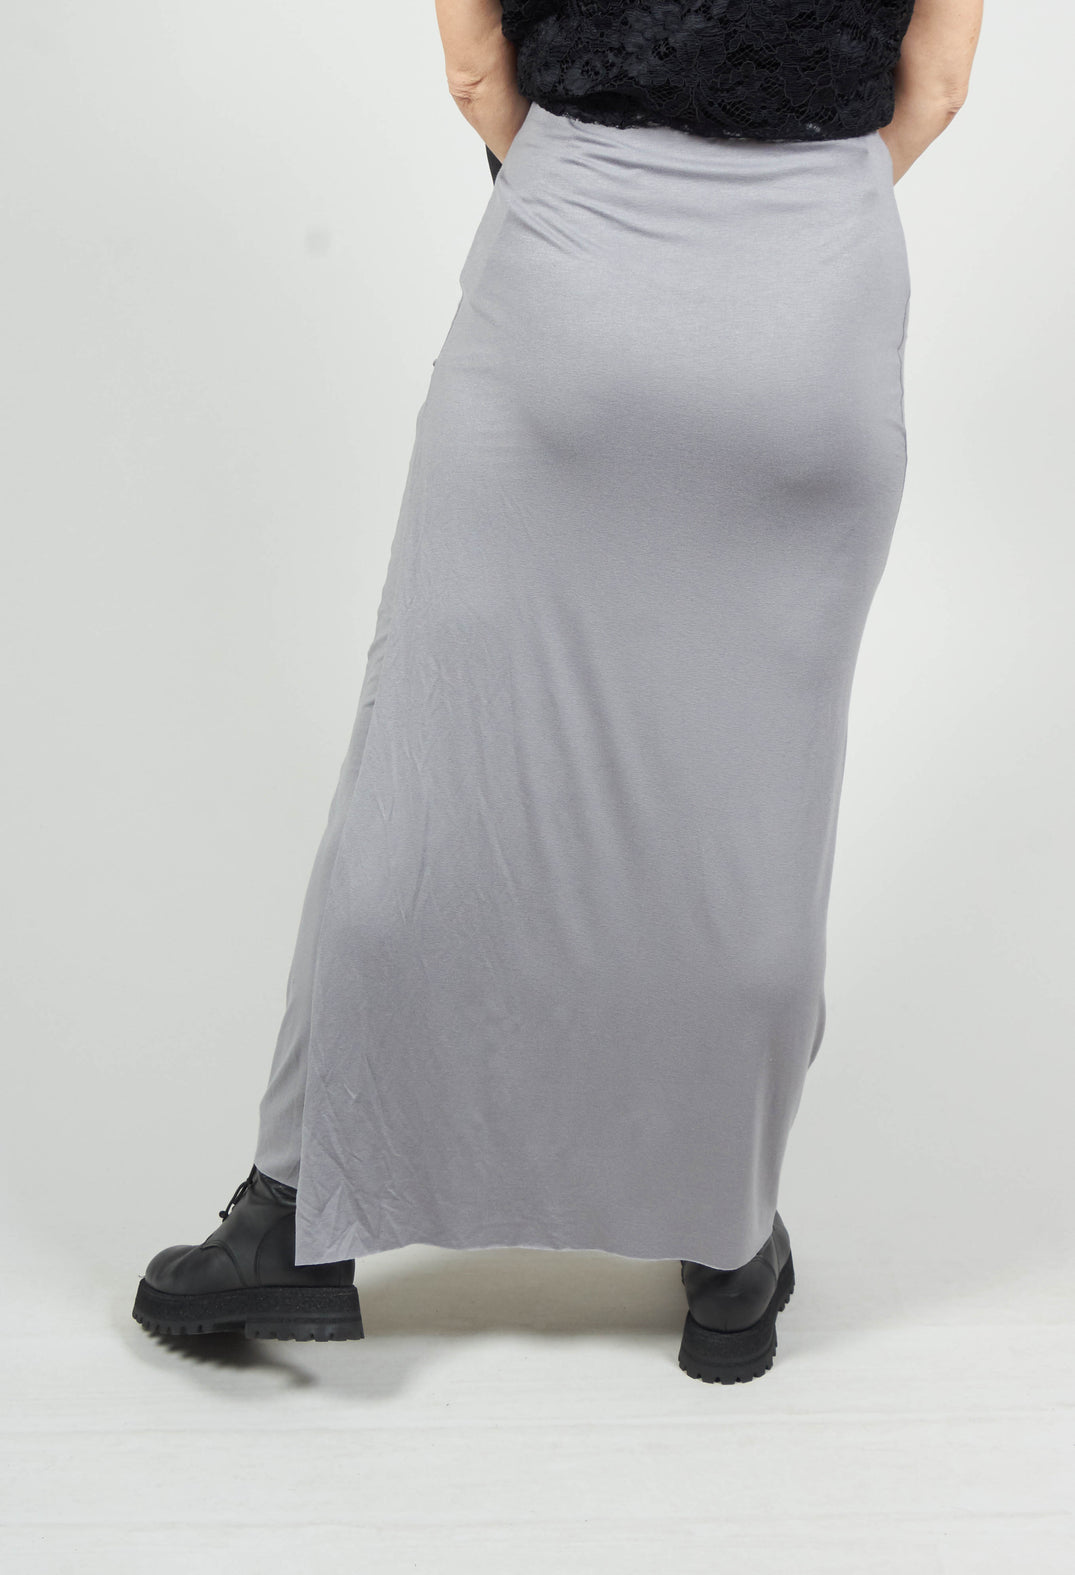 Zigi Long Jersey Fitted Skirt in Light Grey